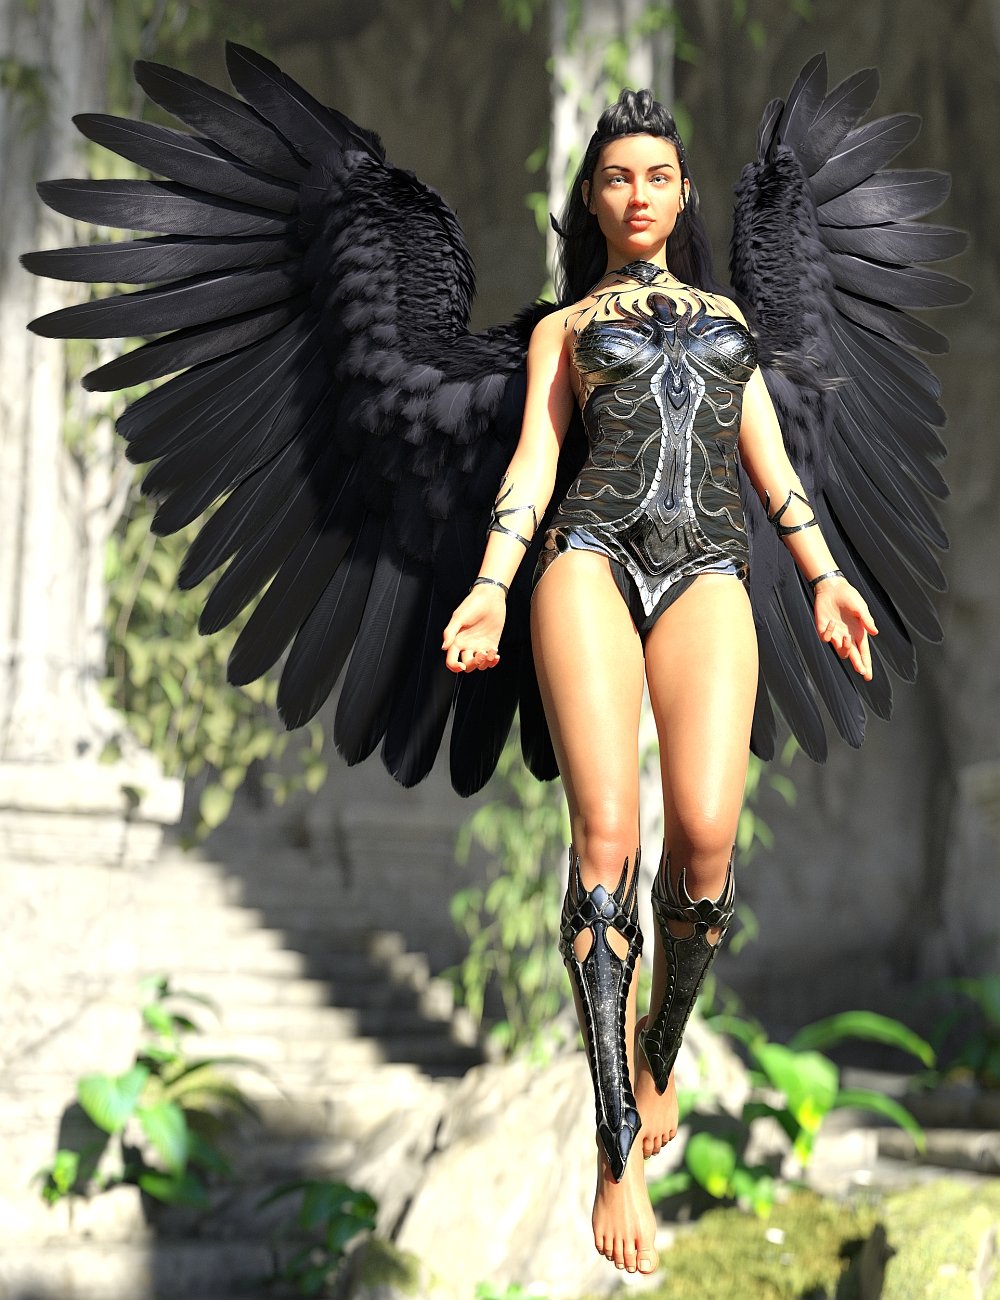 Crow's Wings for Genesis 9 by: Arki, 3D Models by Daz 3D